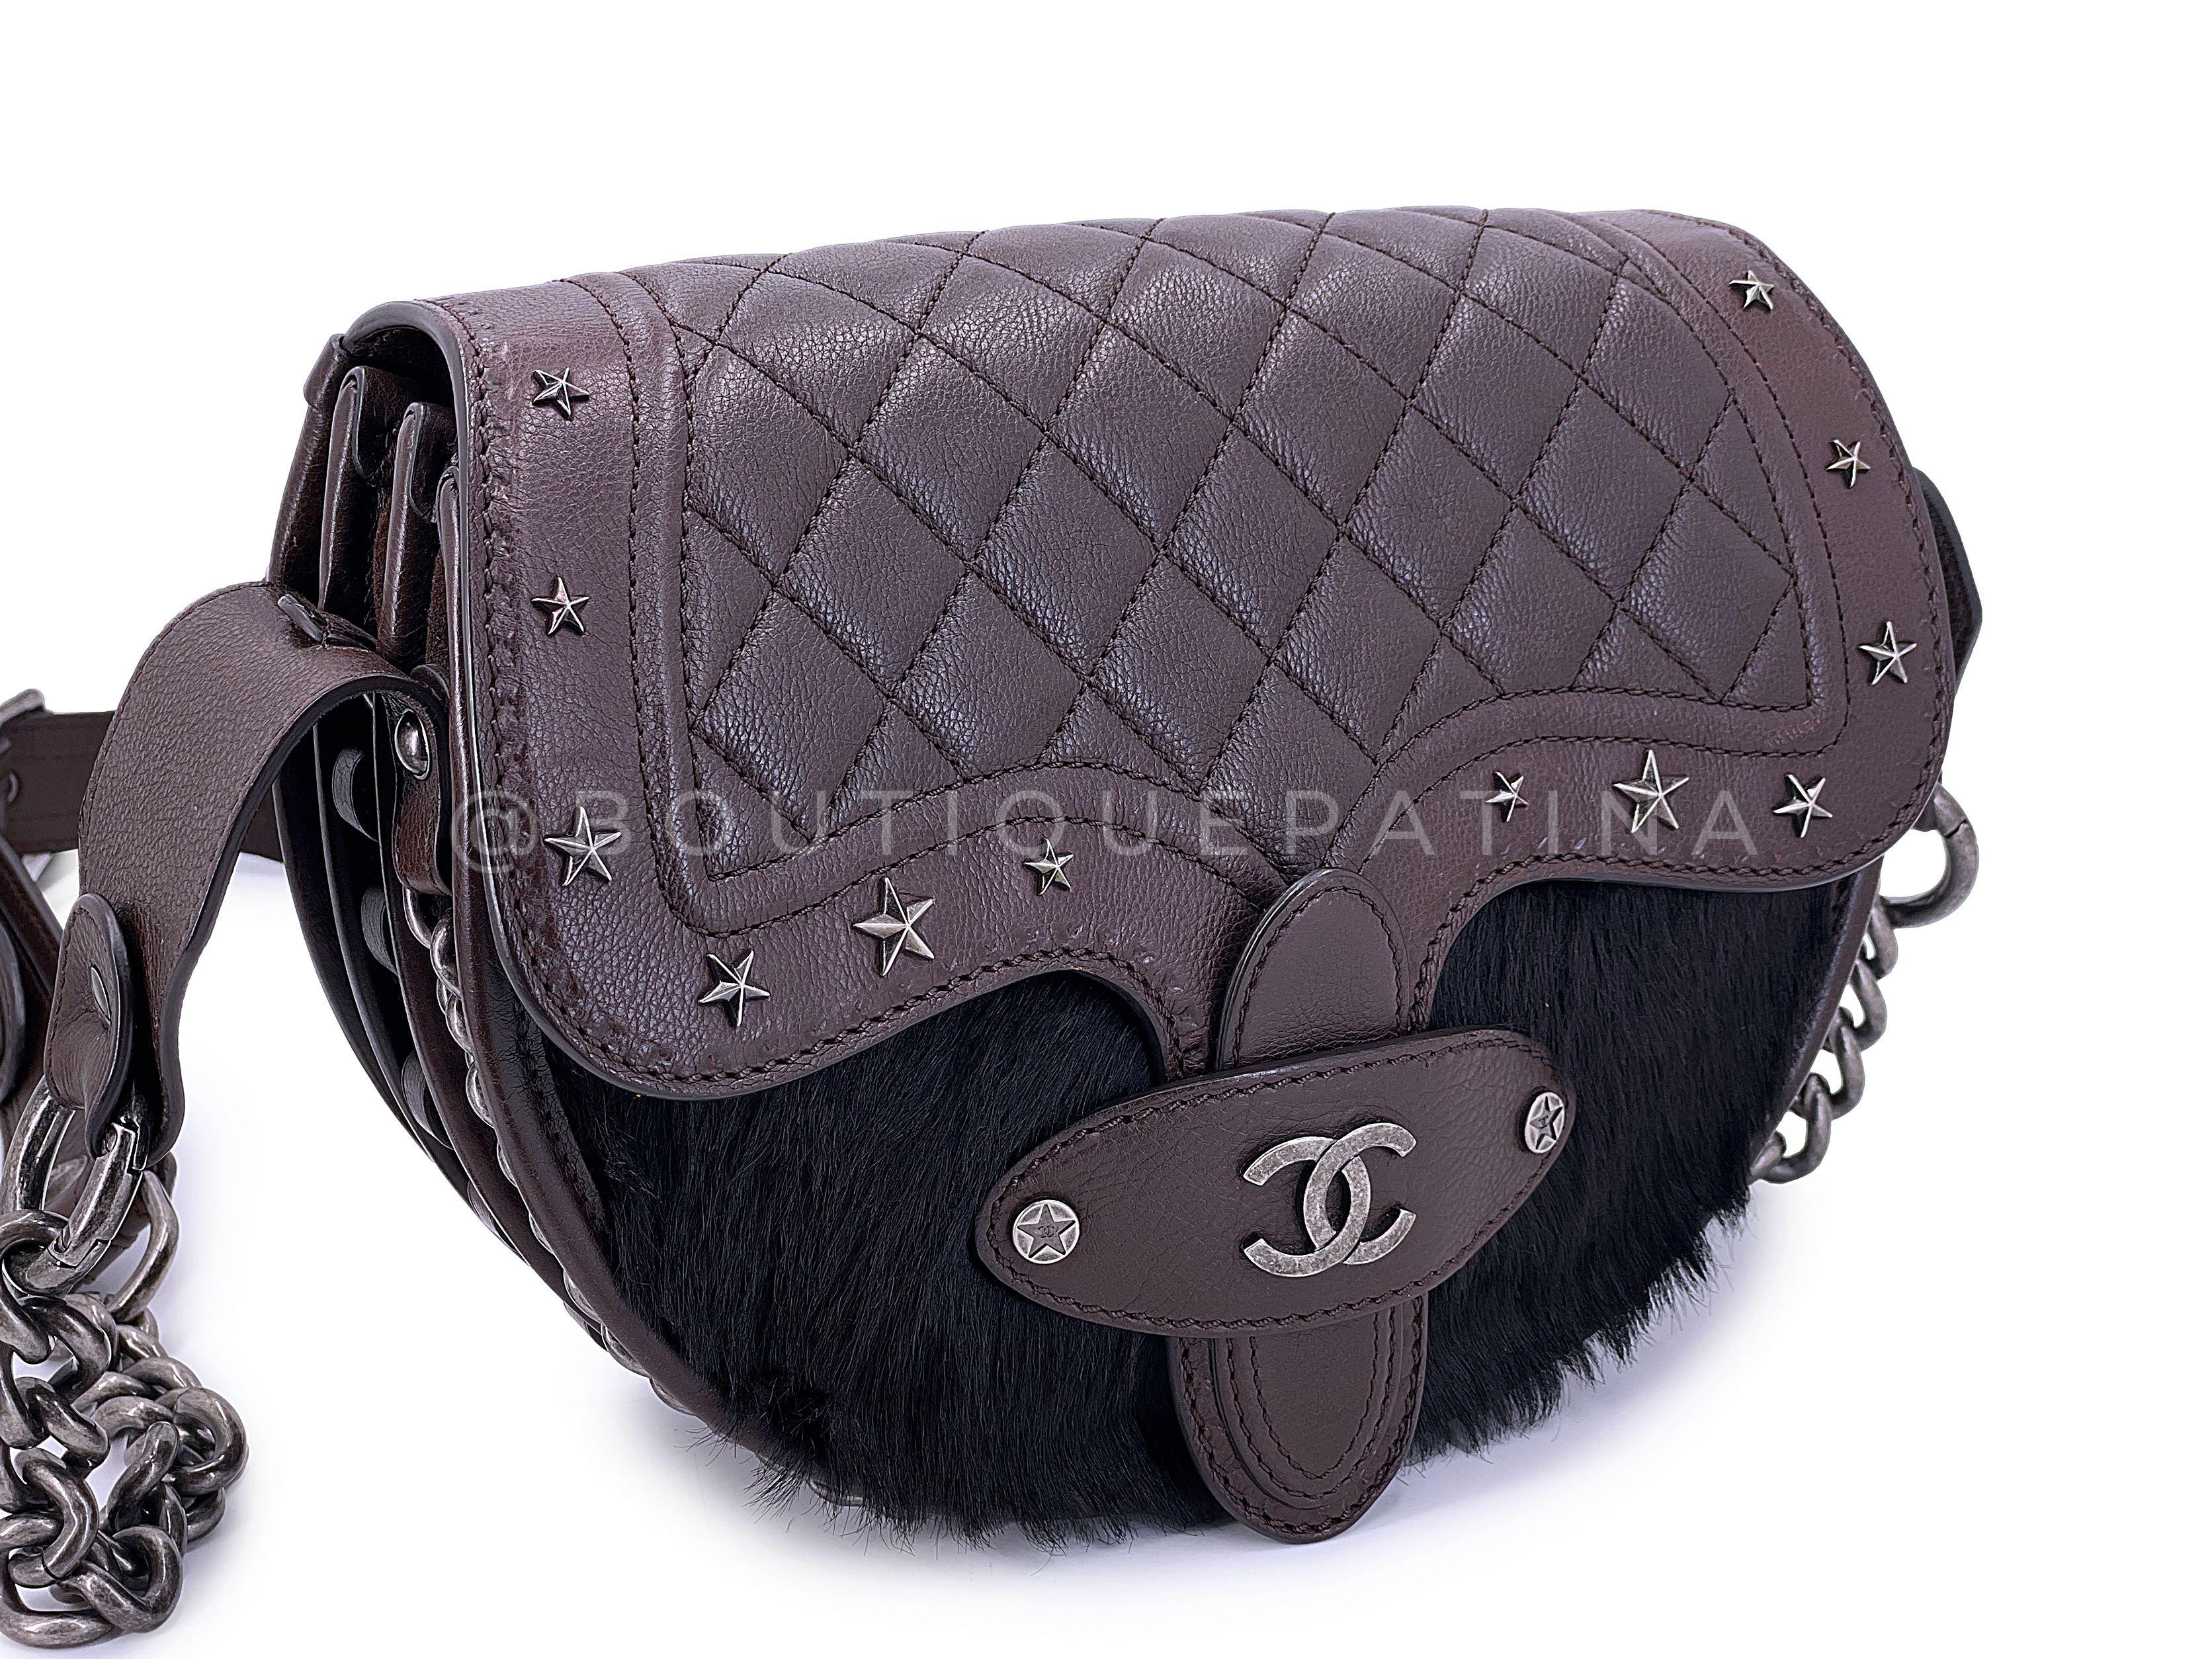 Chanel 2014 Paris Dallas Métiers d'Art Brown Pony Hair Bullet Strap Bag 67762 In Excellent Condition For Sale In Costa Mesa, CA